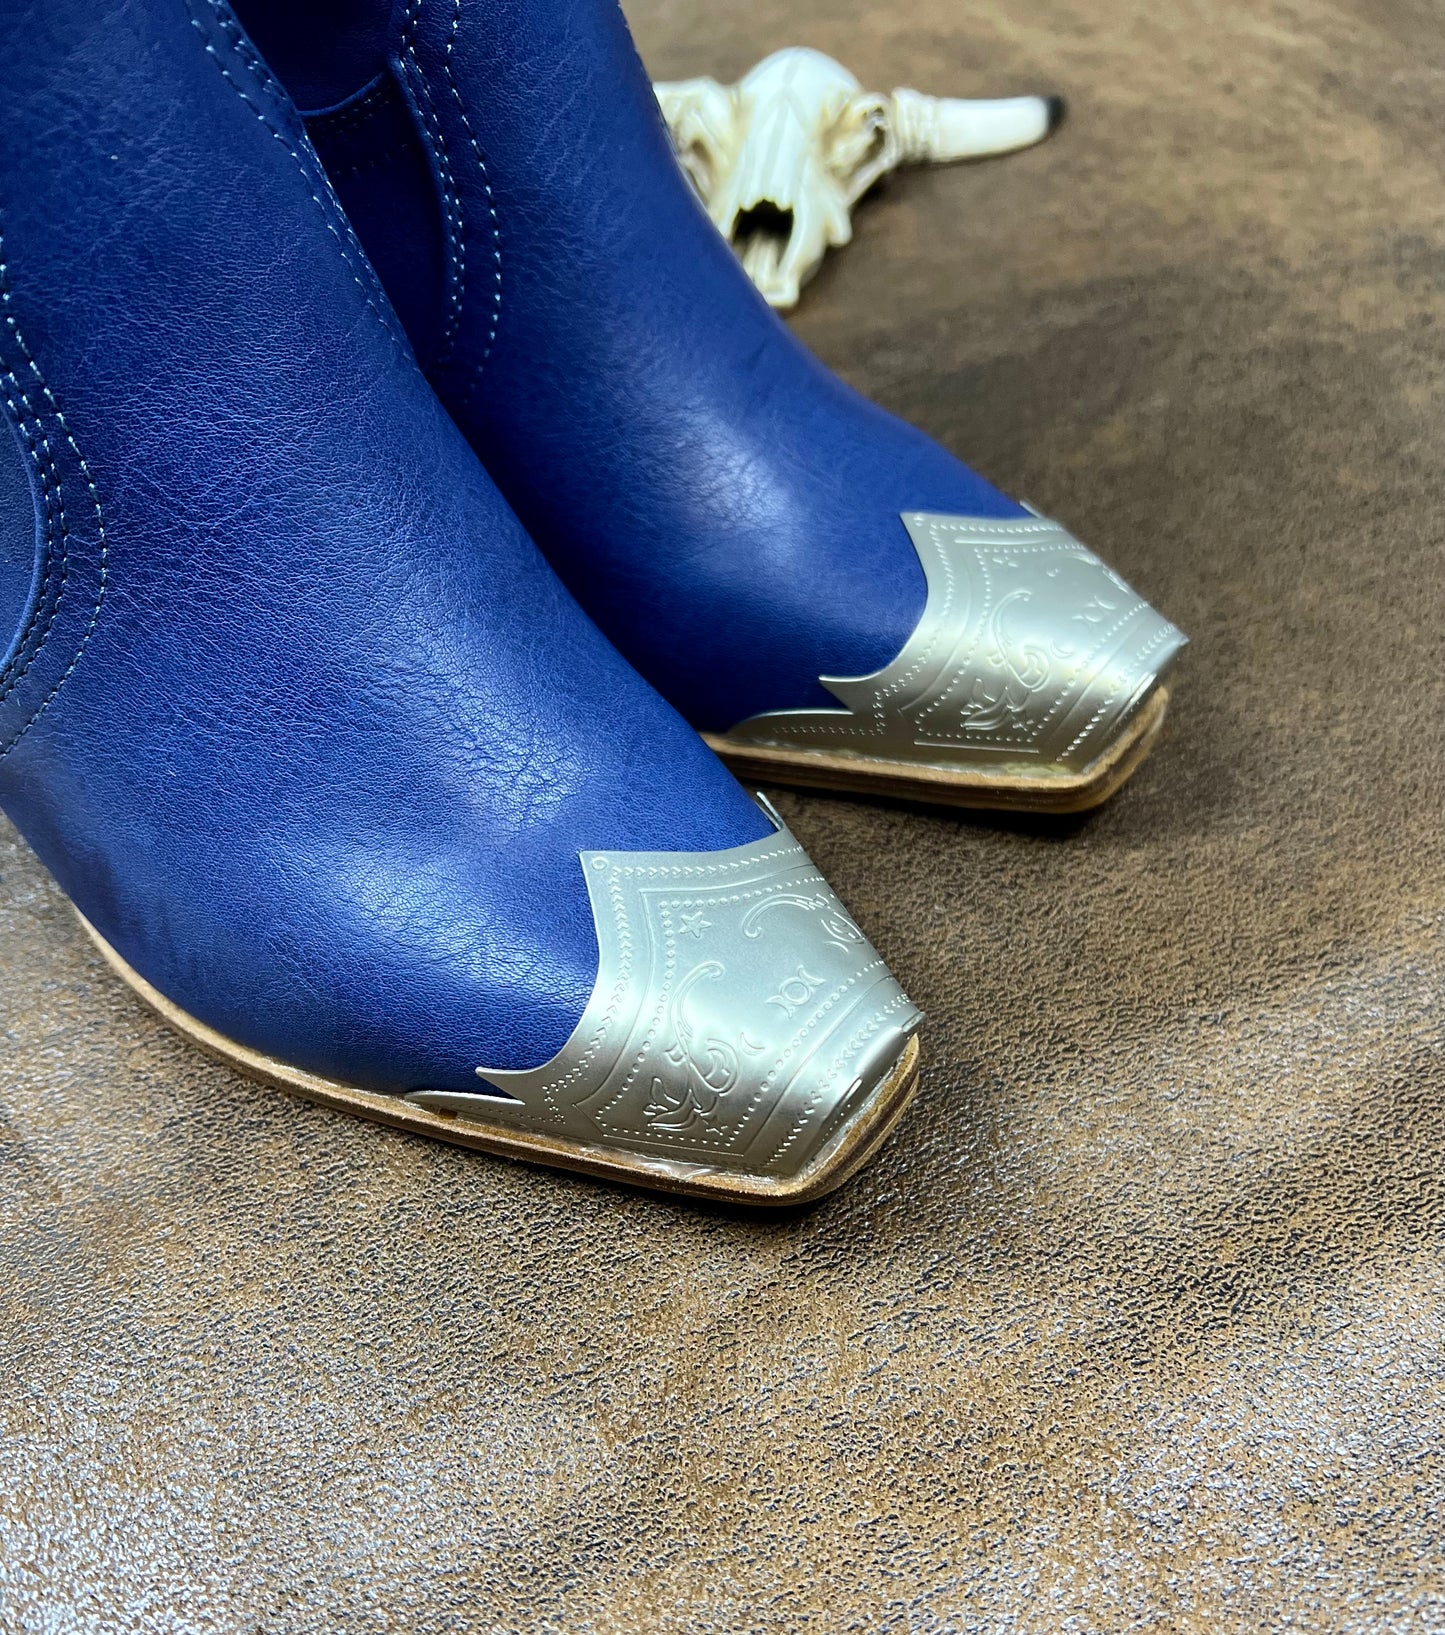 Blue Metallic Silver Toe Tip Mid-Calf
Western Boots